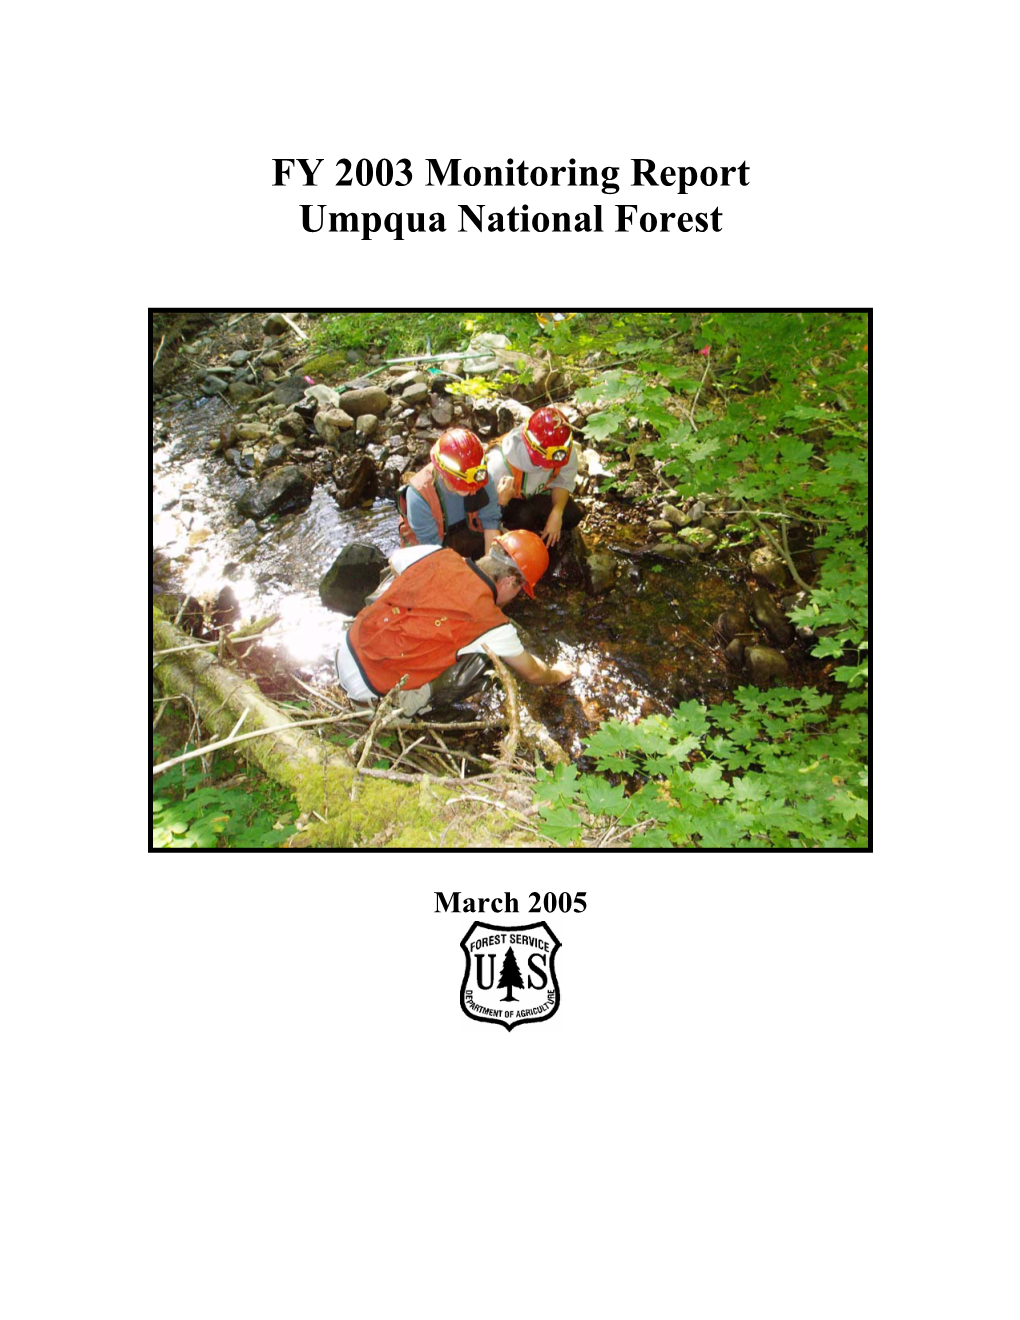 FY 2003 Monitoring Report Umpqua National Forest